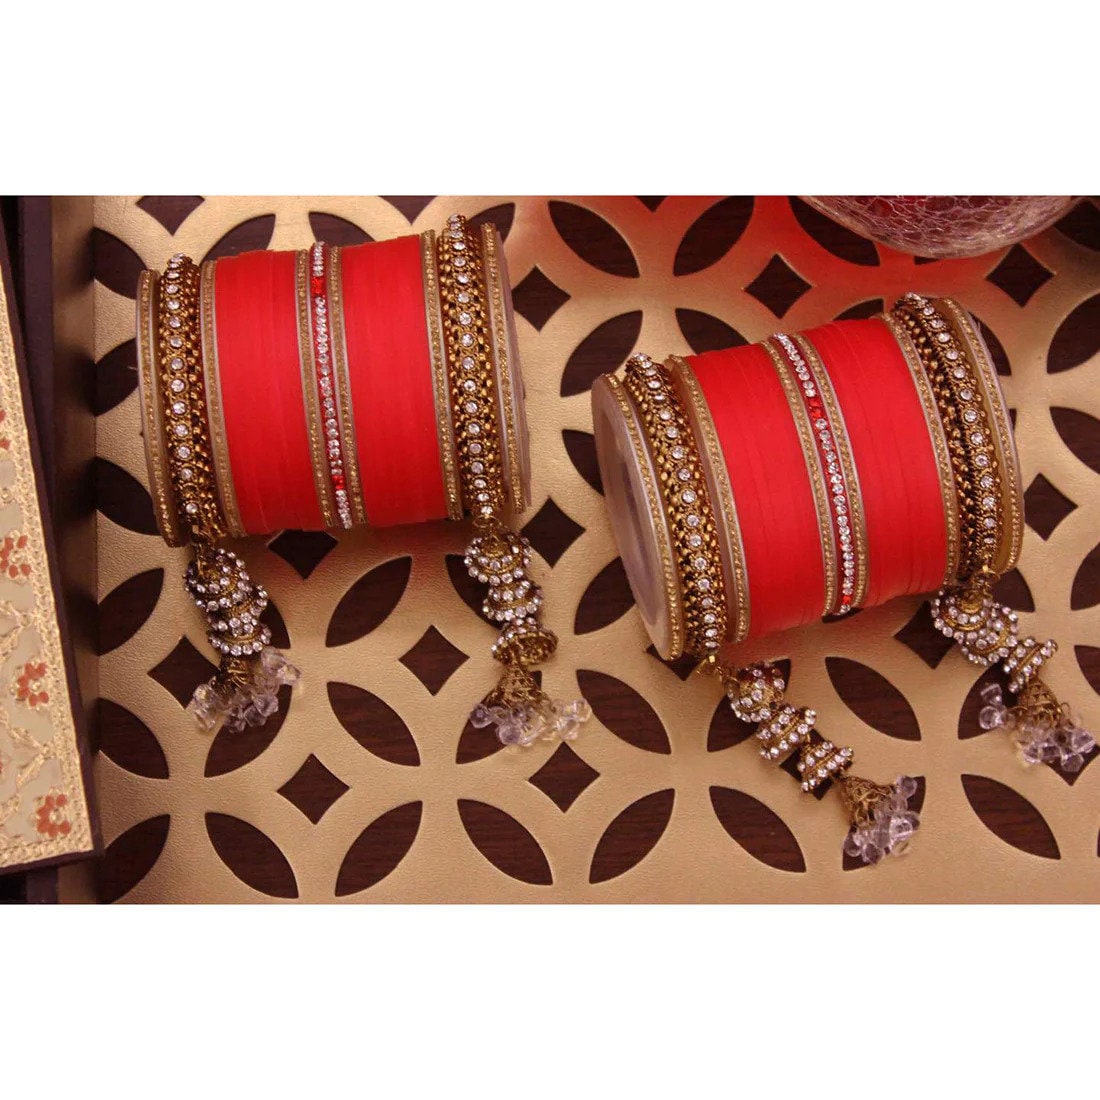 Bridal Bangles Set, Indian Jewelry, Latkan Bangles, Indian wedding bridal chura with latkan/hangings, Wedding Bangles Bracelet Women Jewelry